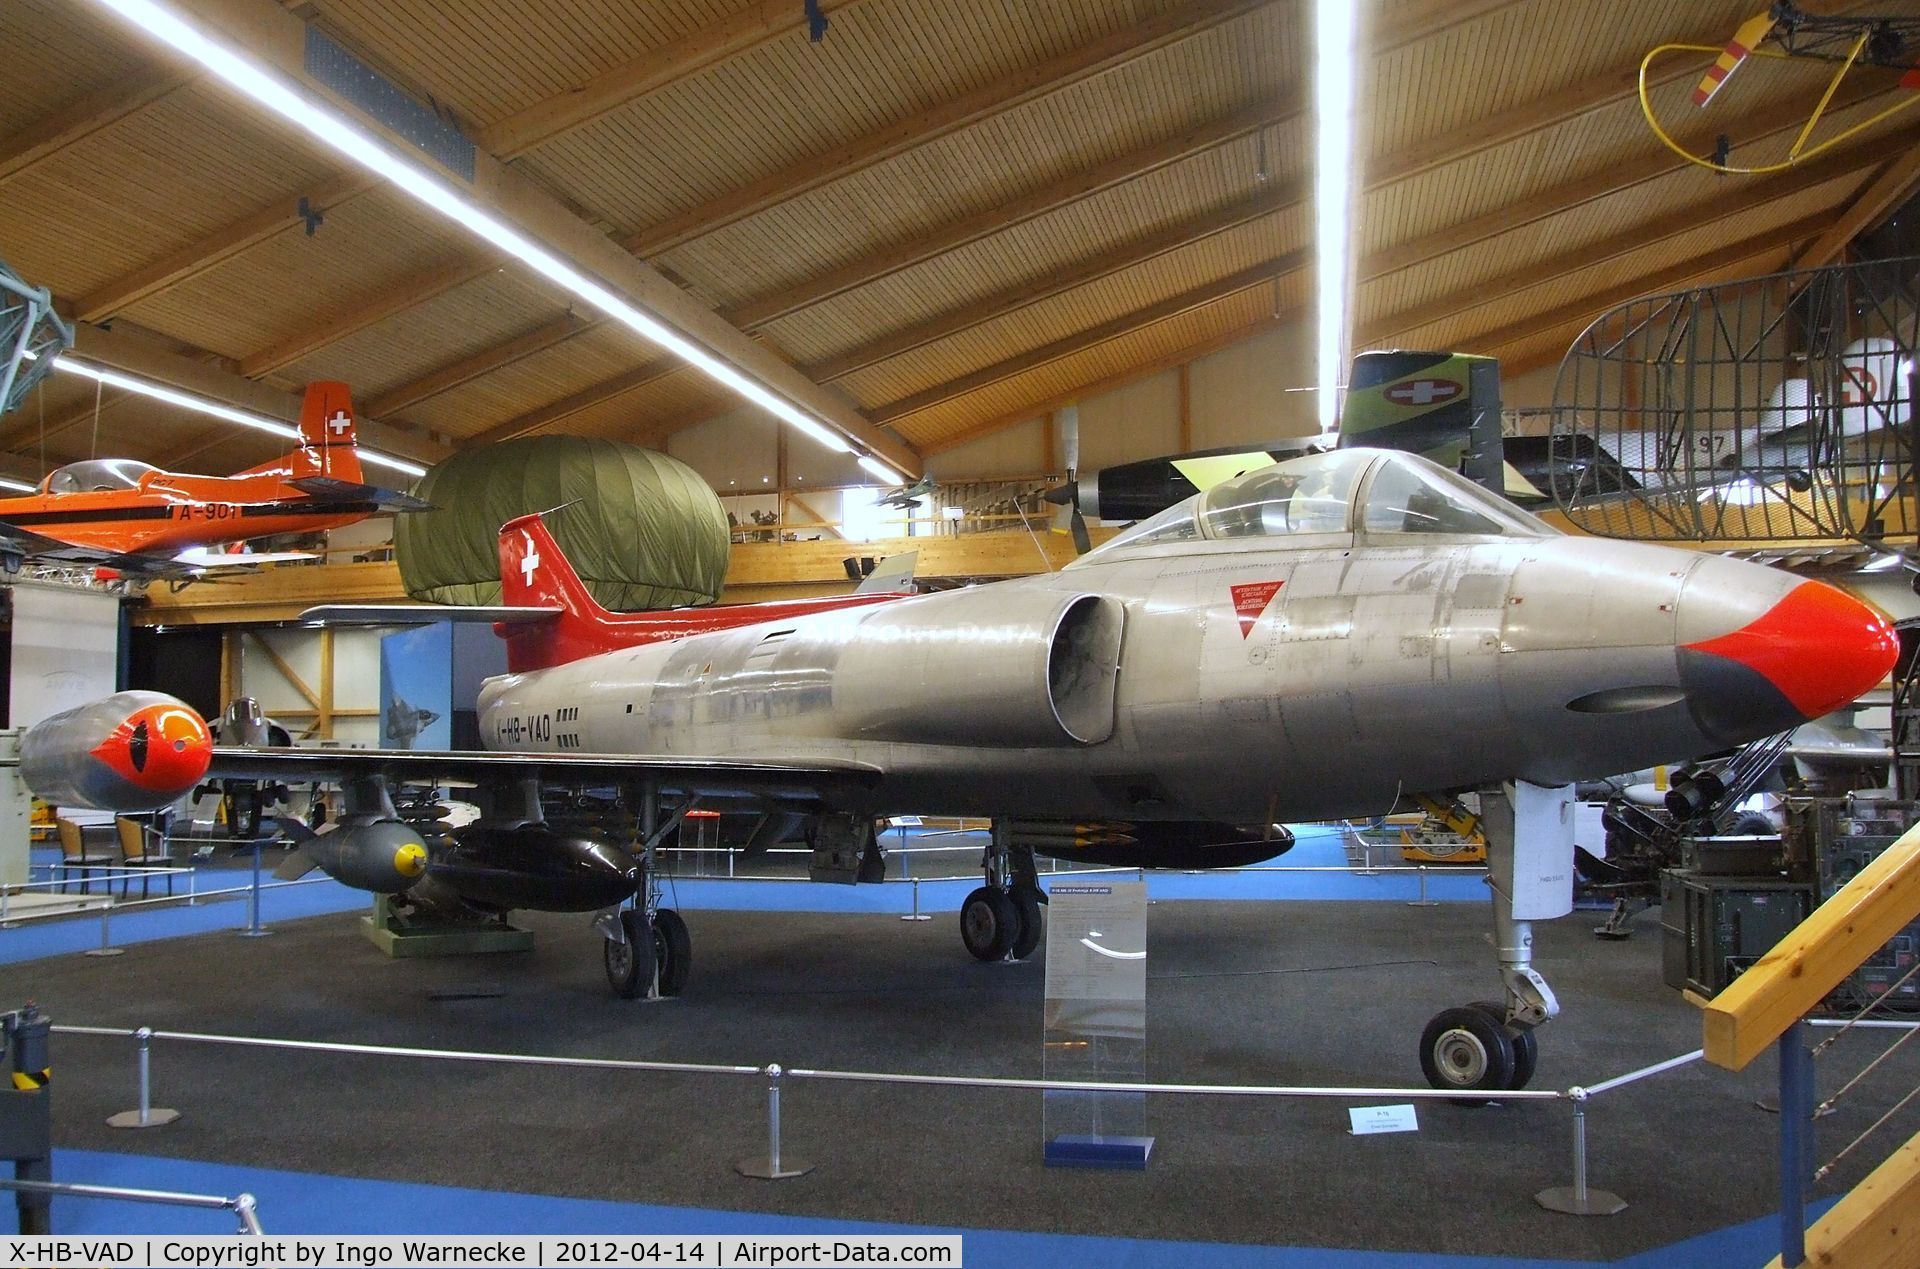 X-HB-VAD, 1955 FFA P-16 MkIII C/N 05, FFA P-16 Mk III at the Flieger-Flab-Museum, Dübendorf